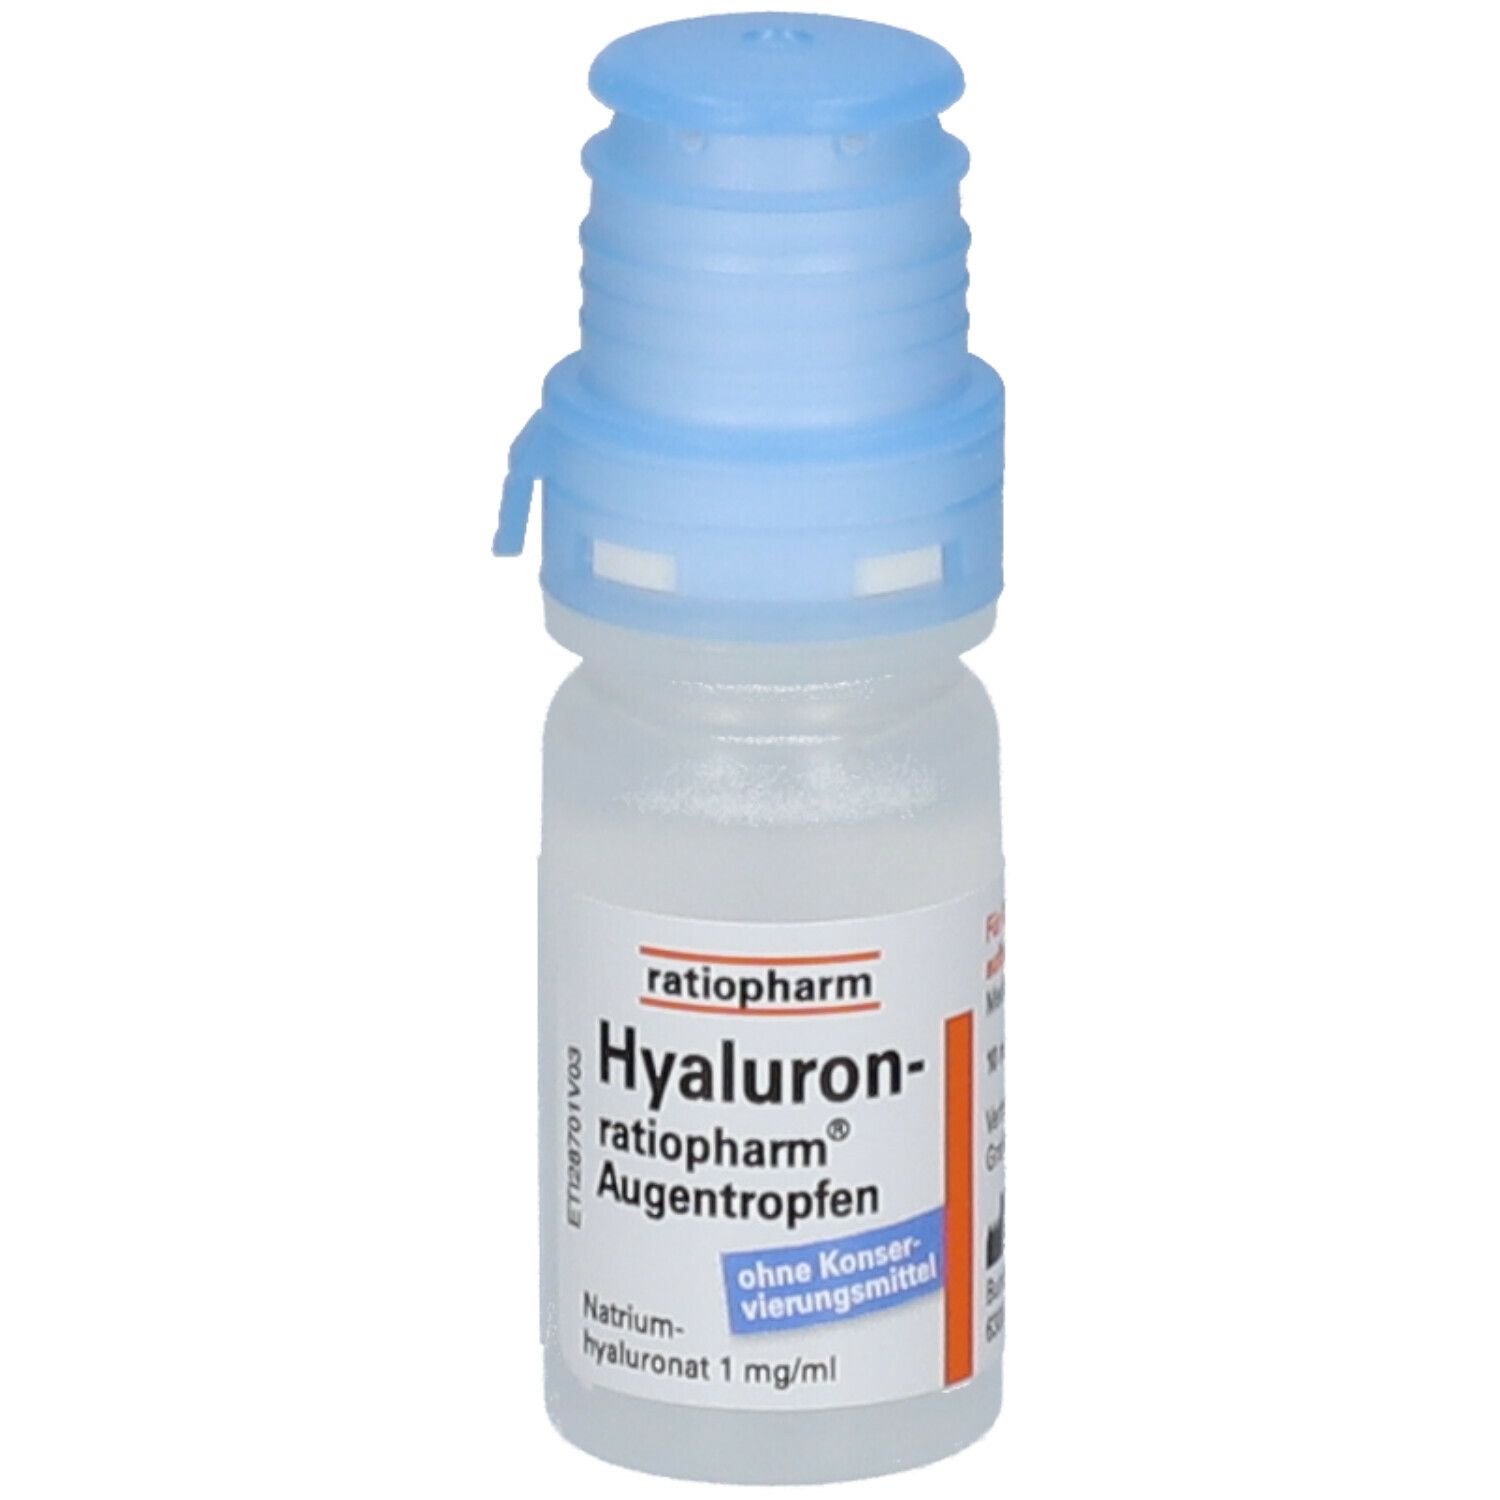 Hyaluron-ratiopharm® Augentropfen